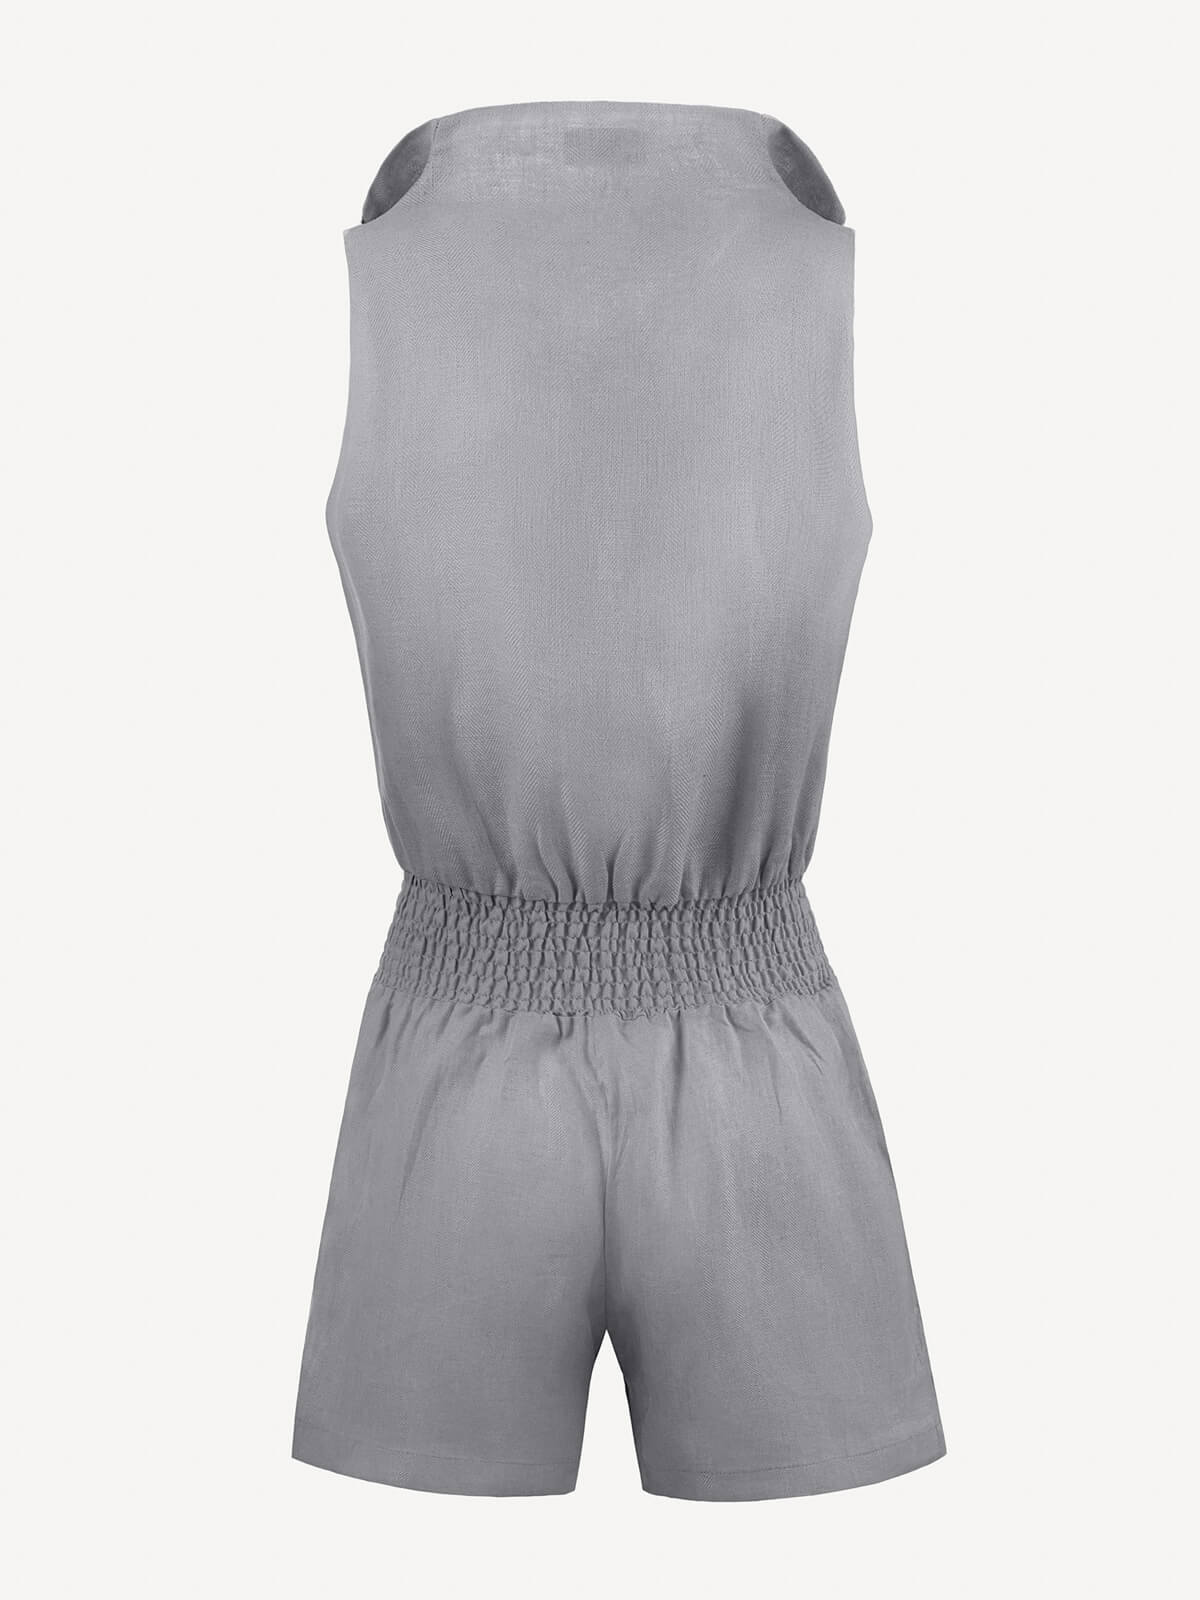 Jumpsuit Tuta Zip Woman Dark Grey back 100% Capri